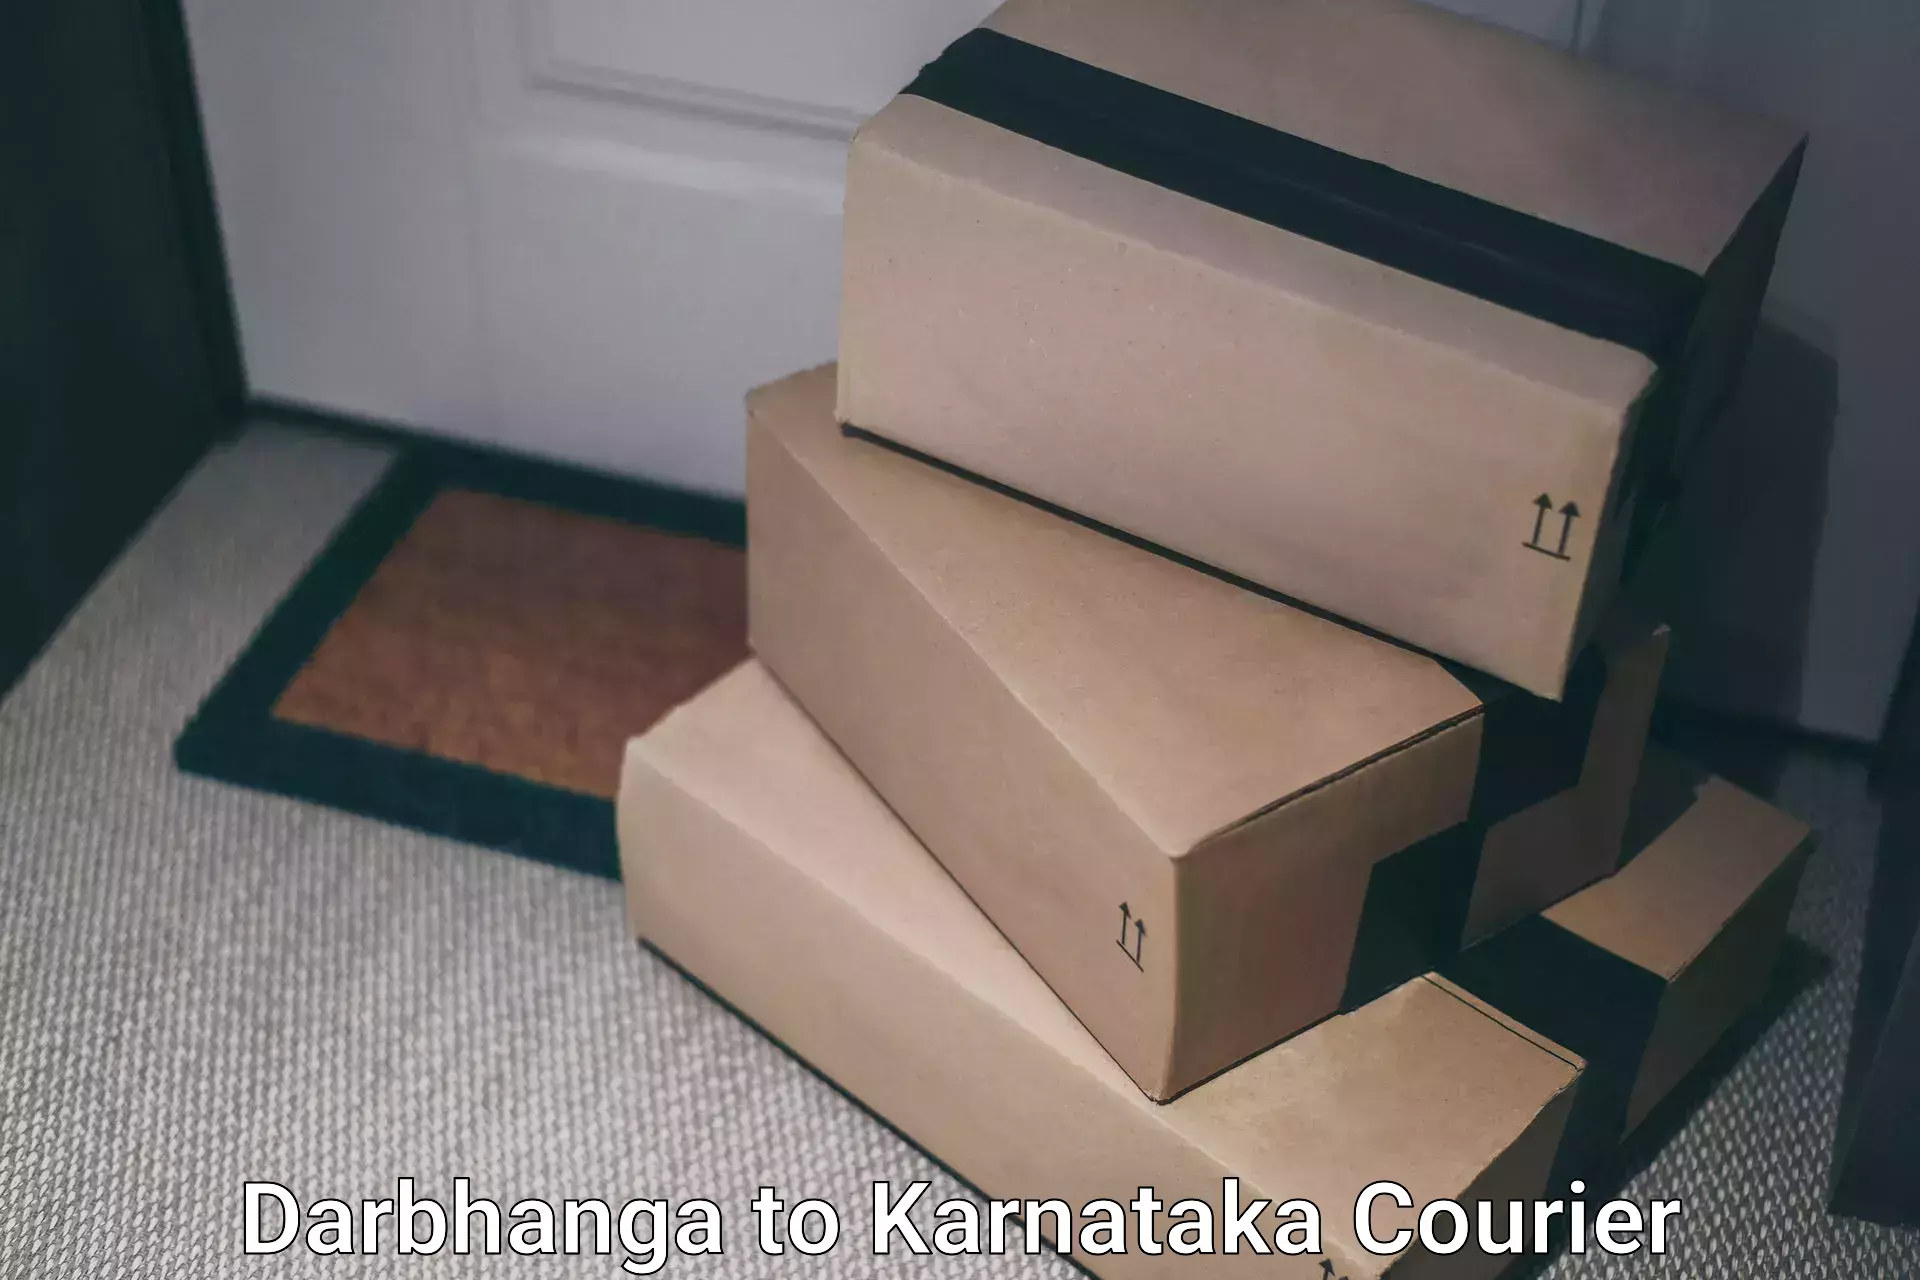 Courier service comparison Darbhanga to Tavarekere